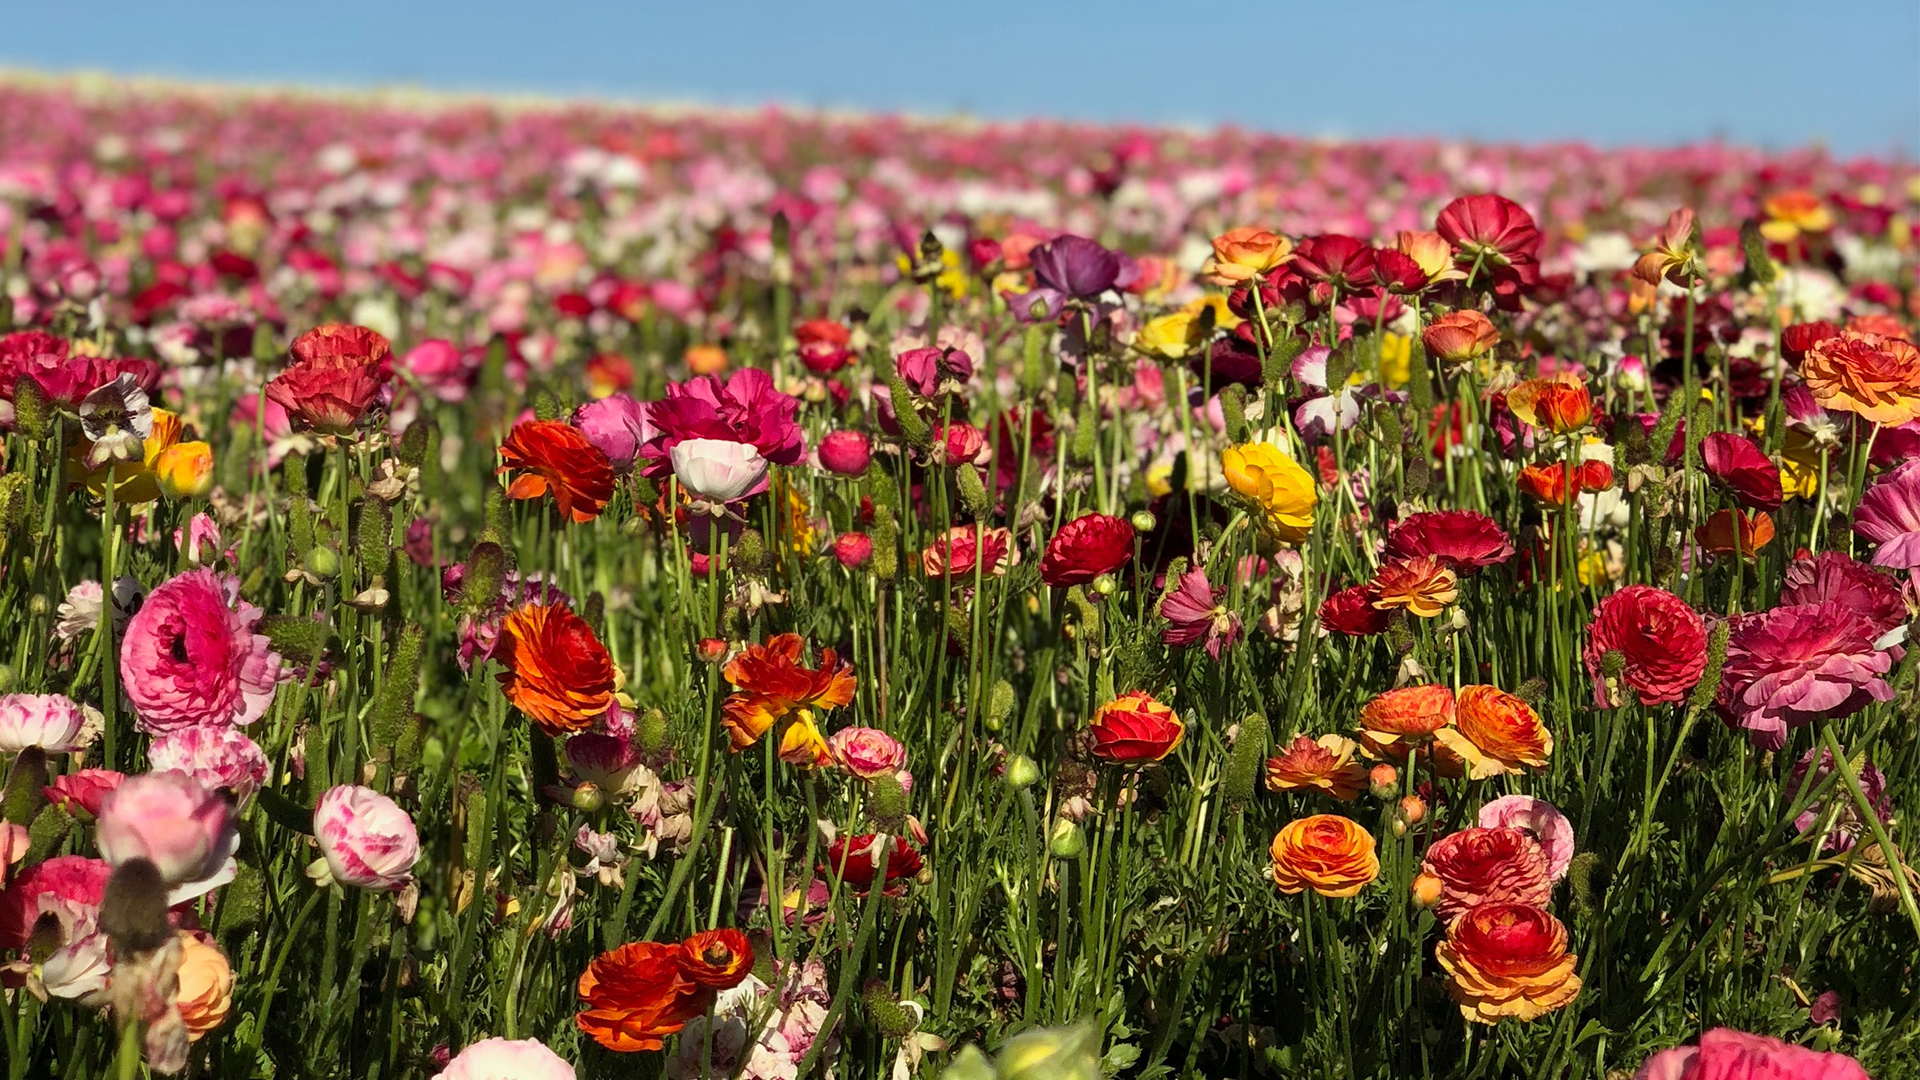 The Persian buttercups of Flower Fields